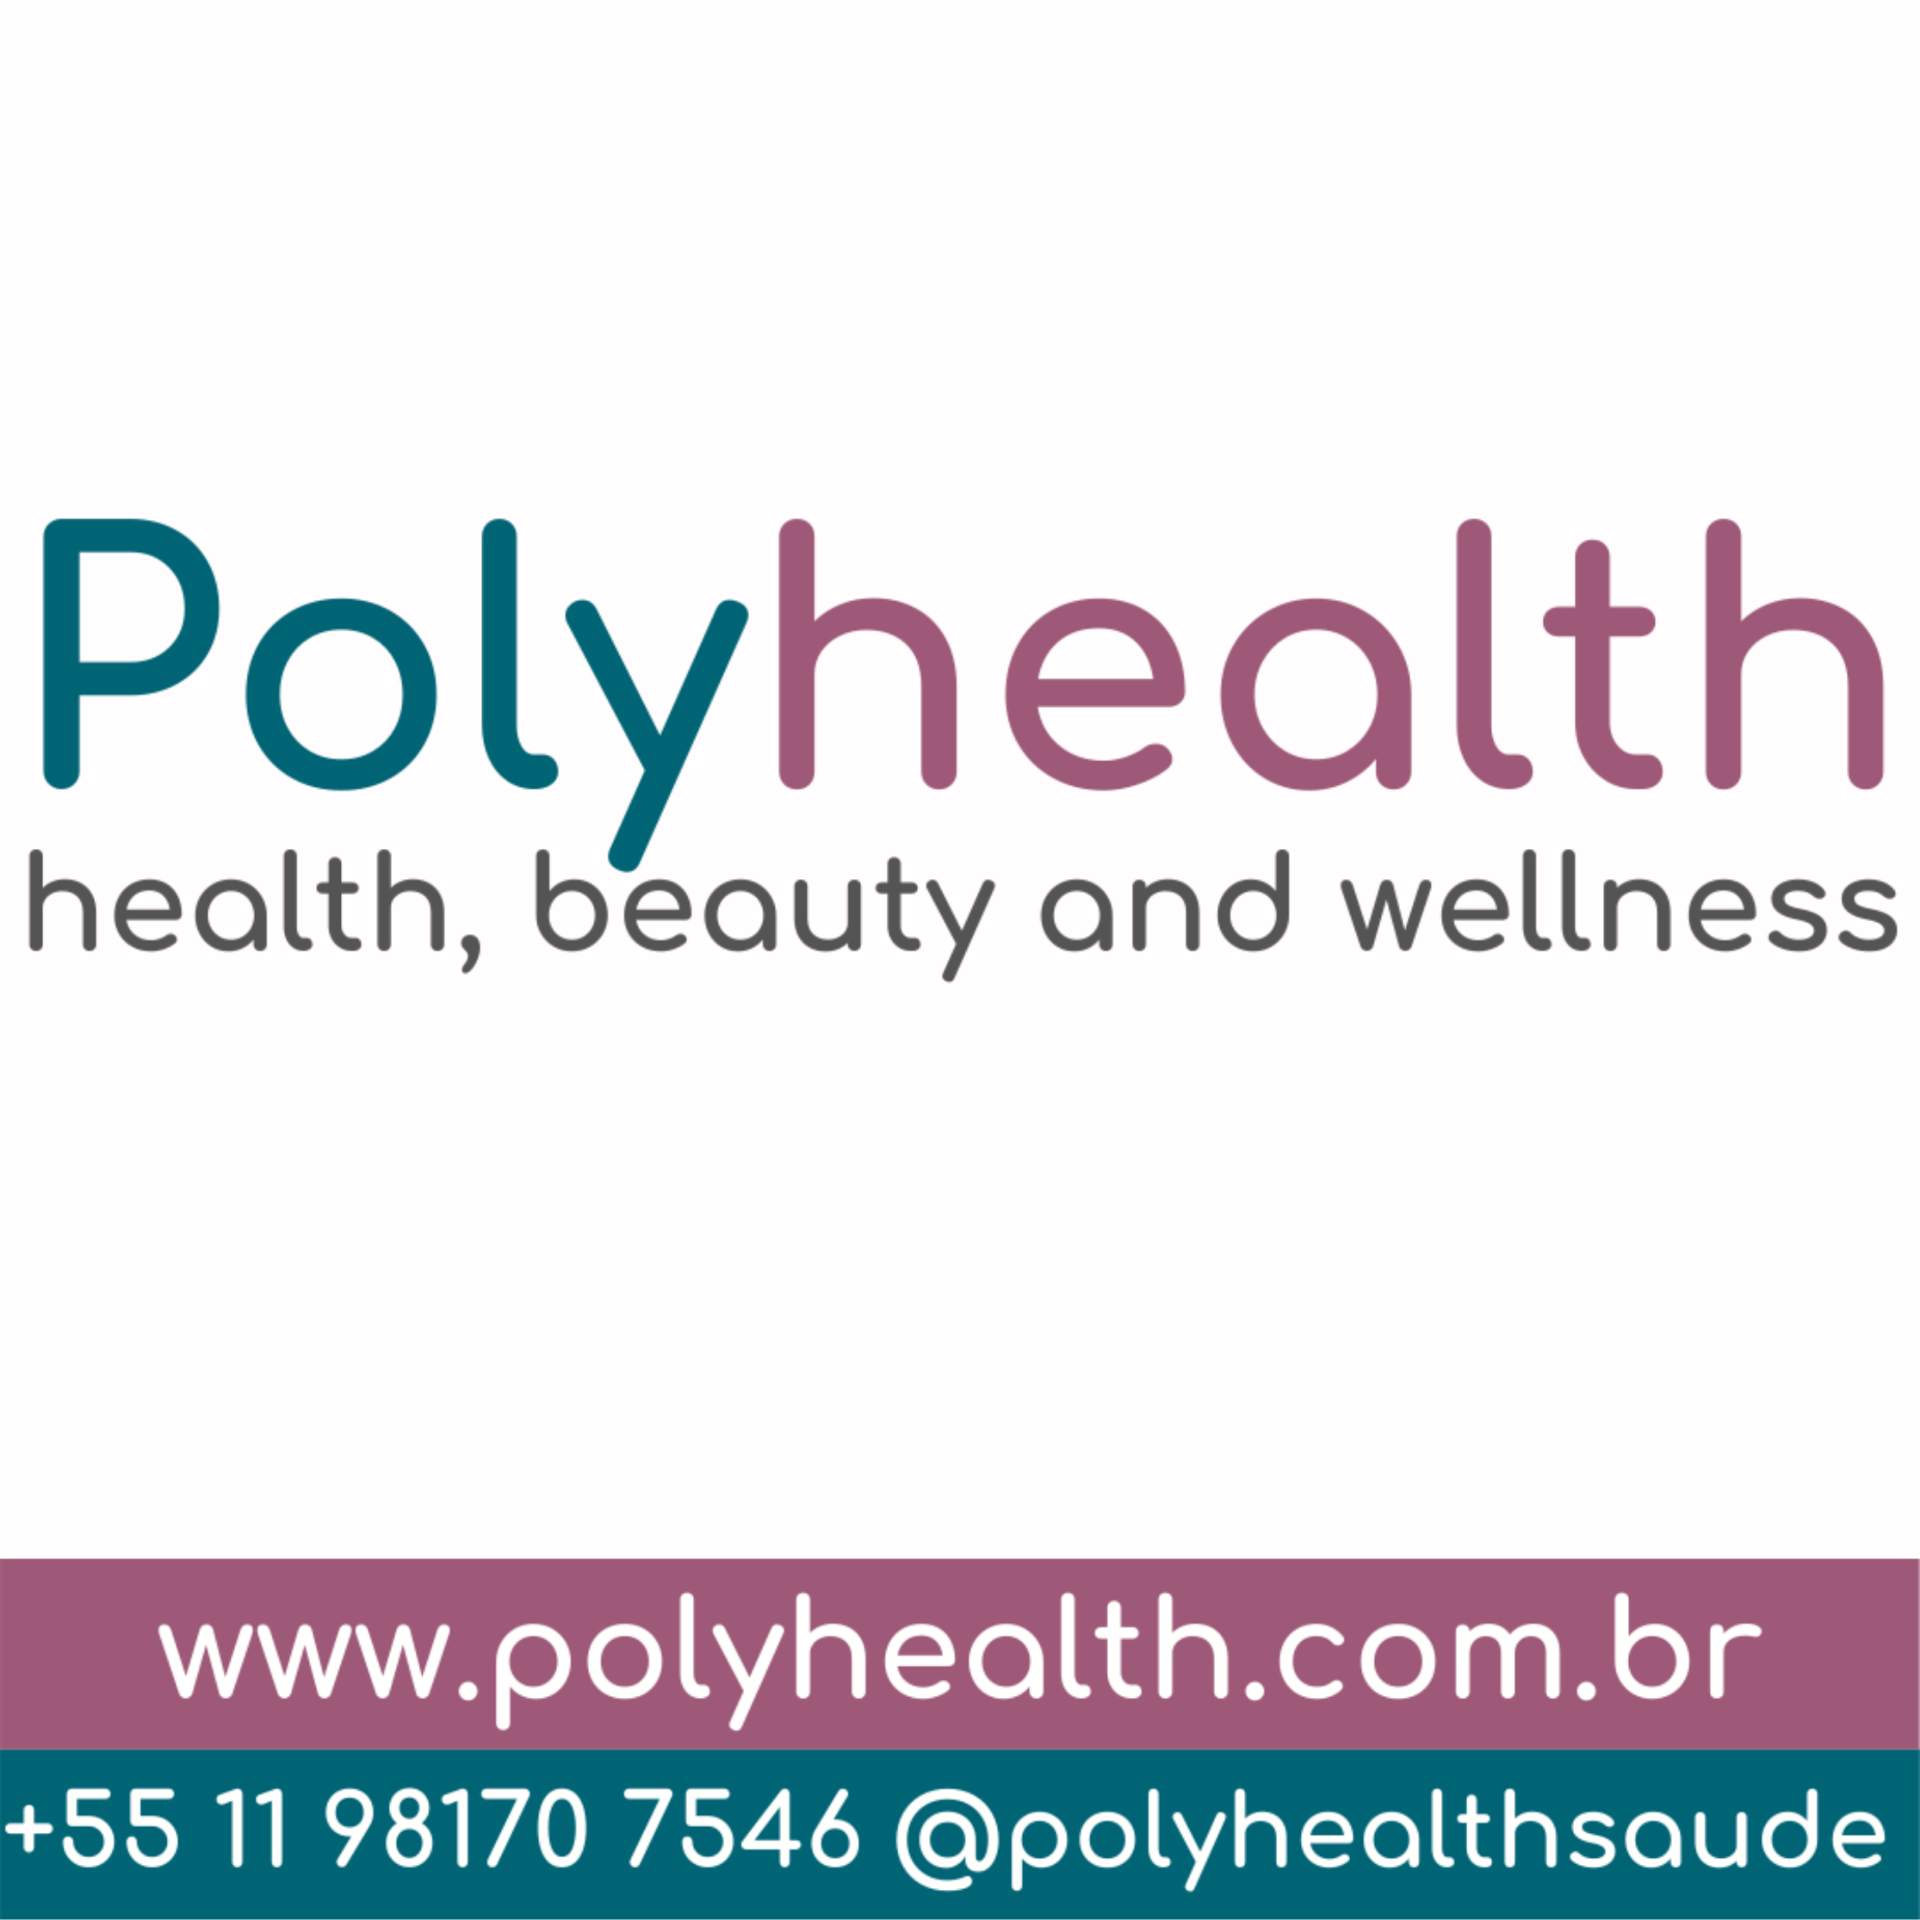 Polyhealth